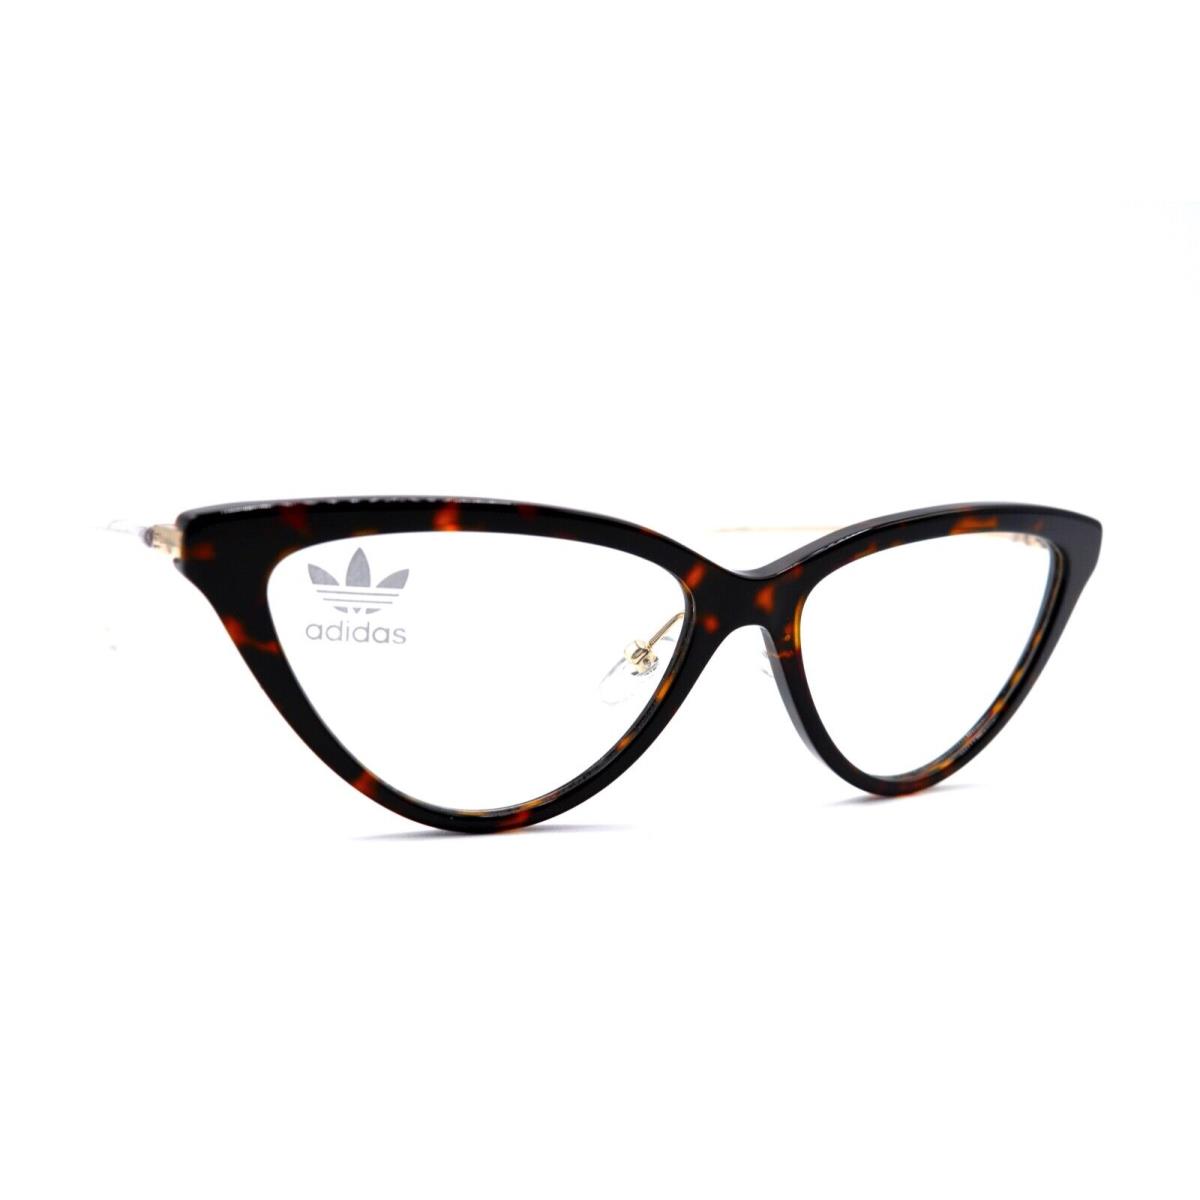 Adidas AOK006O.092.000 Dark Havana Eyeglasses Frames RX 55-15 22